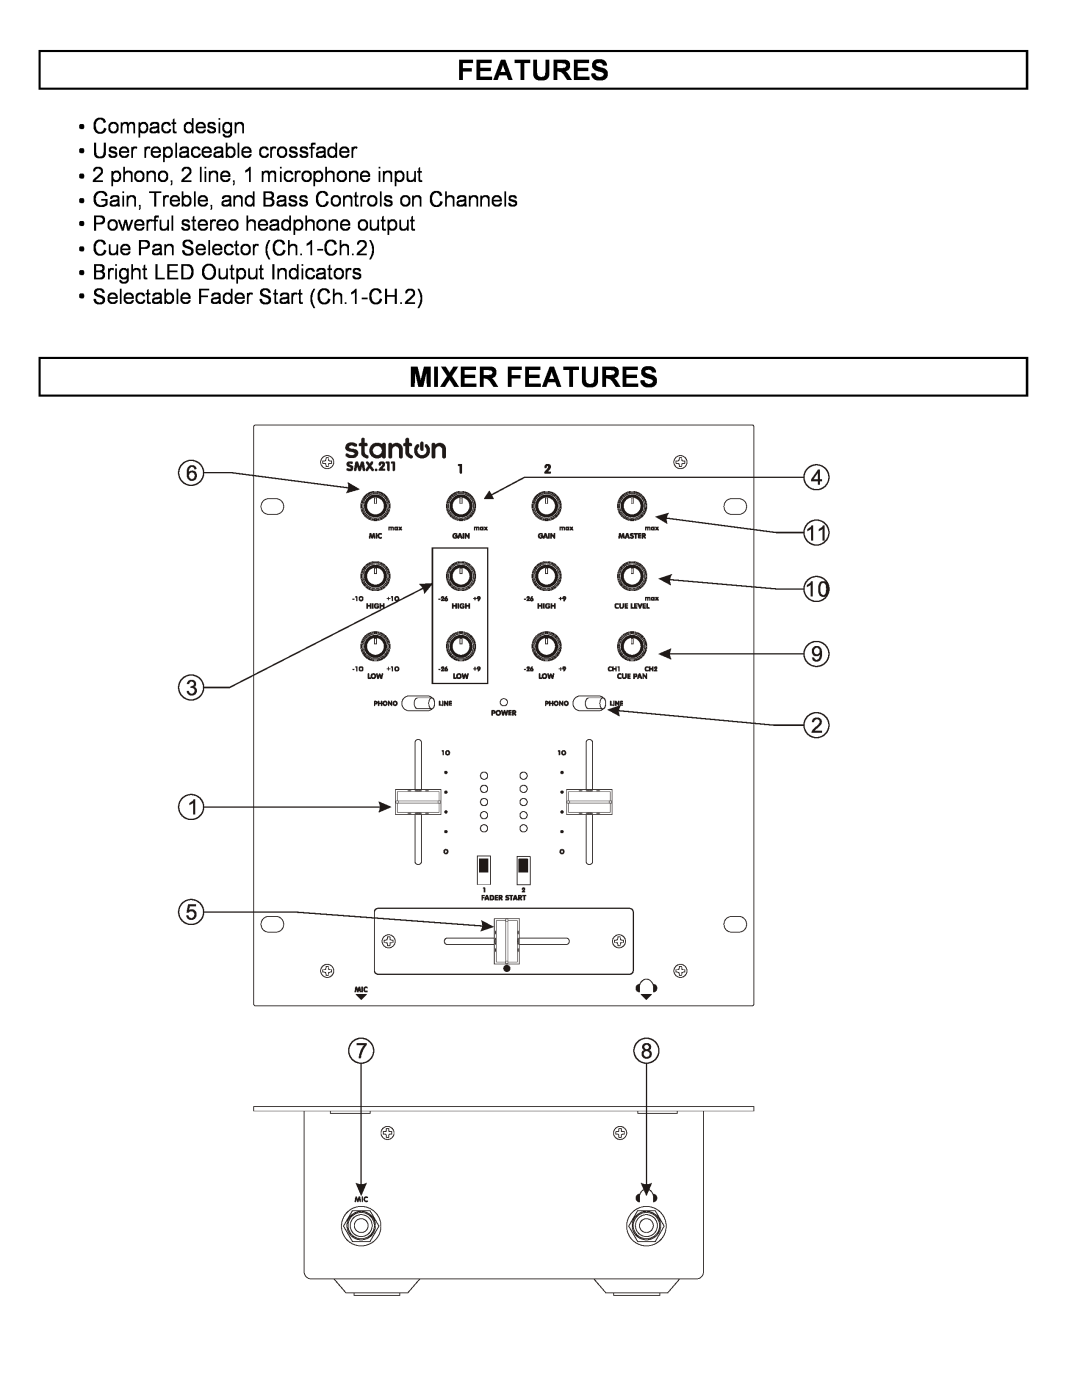 Stanton SMX.211 manual Mixer Features, 6 3 1 5, 4 11 10, • Compact design • User replaceable crossfader 